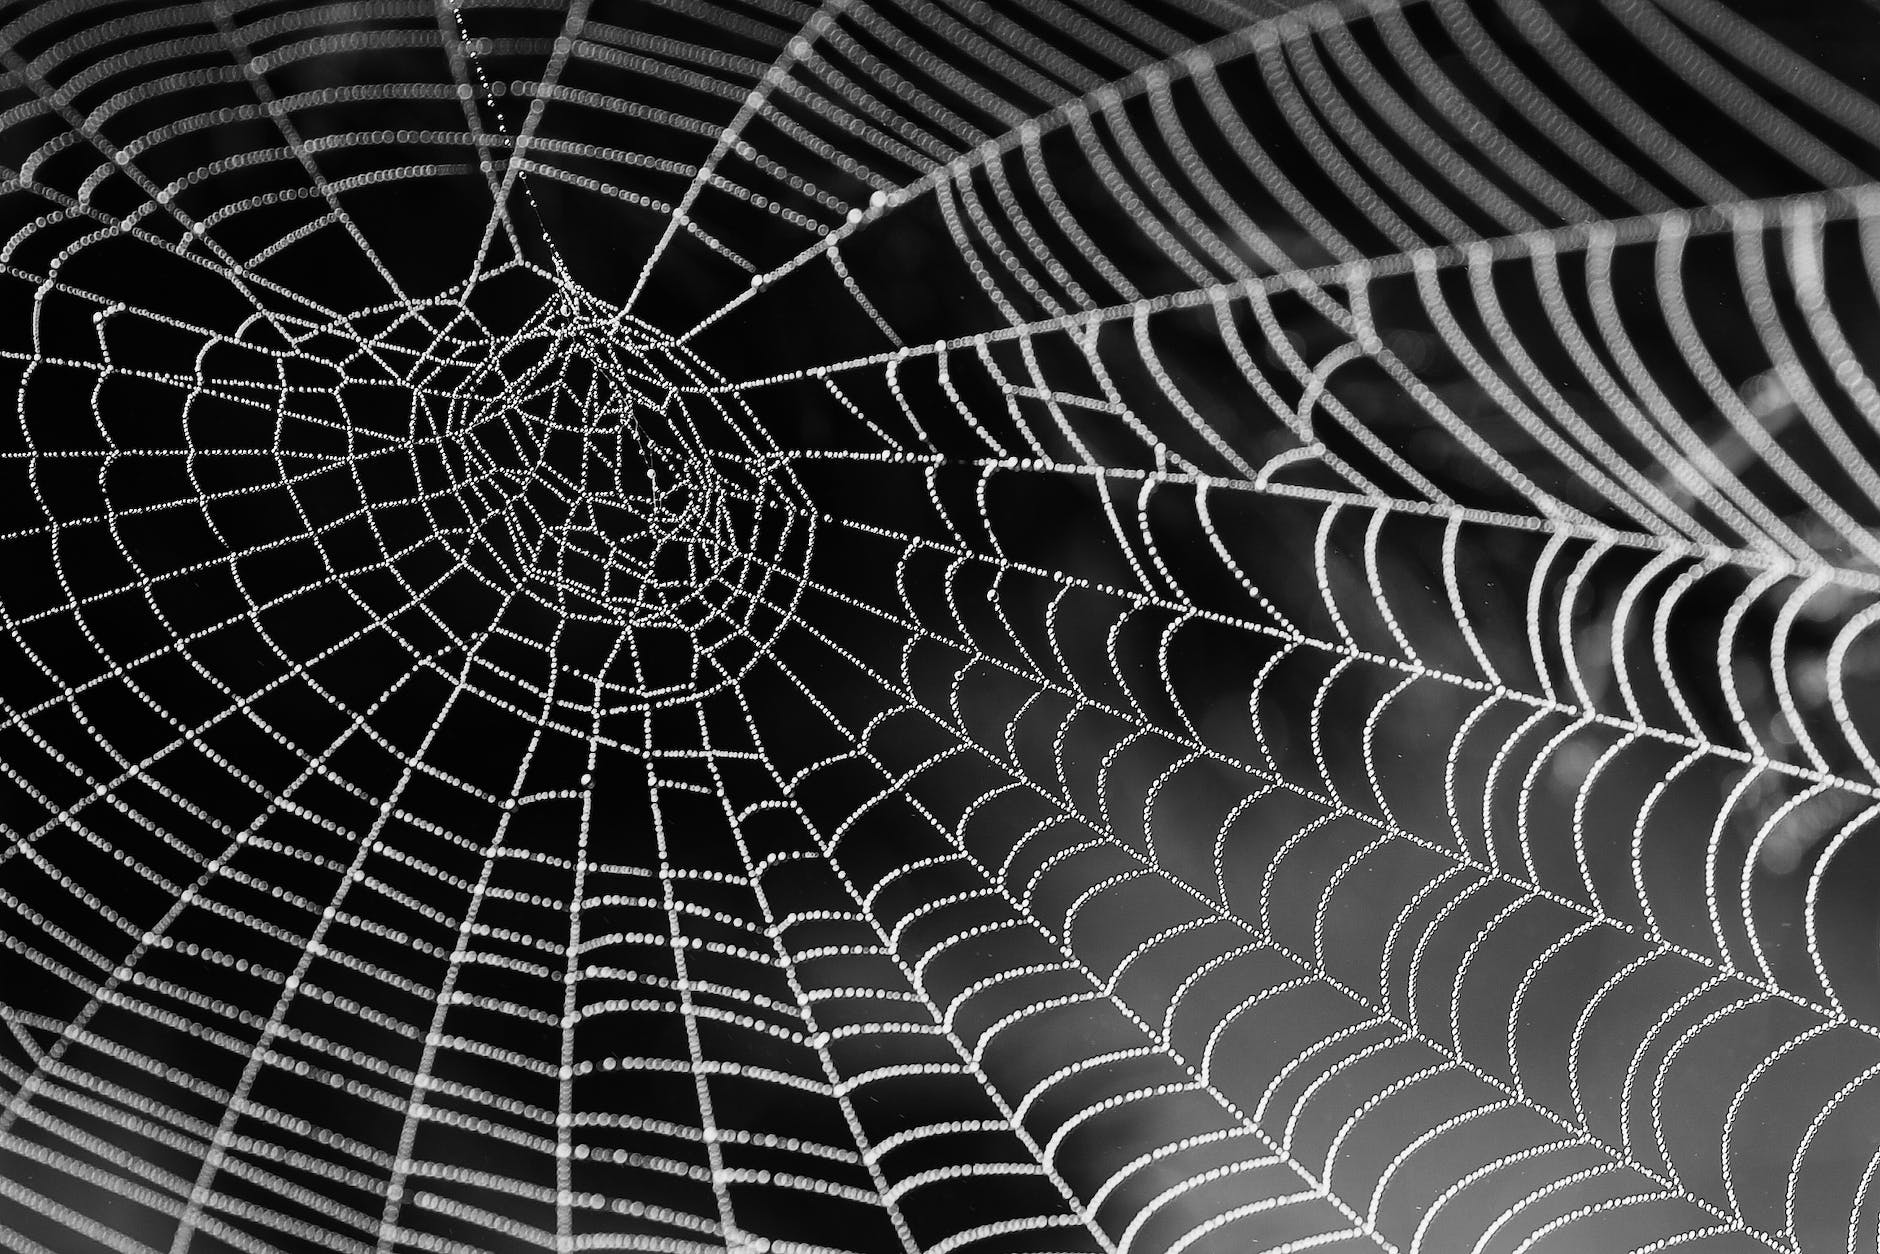 A Tangled Web of Regulations